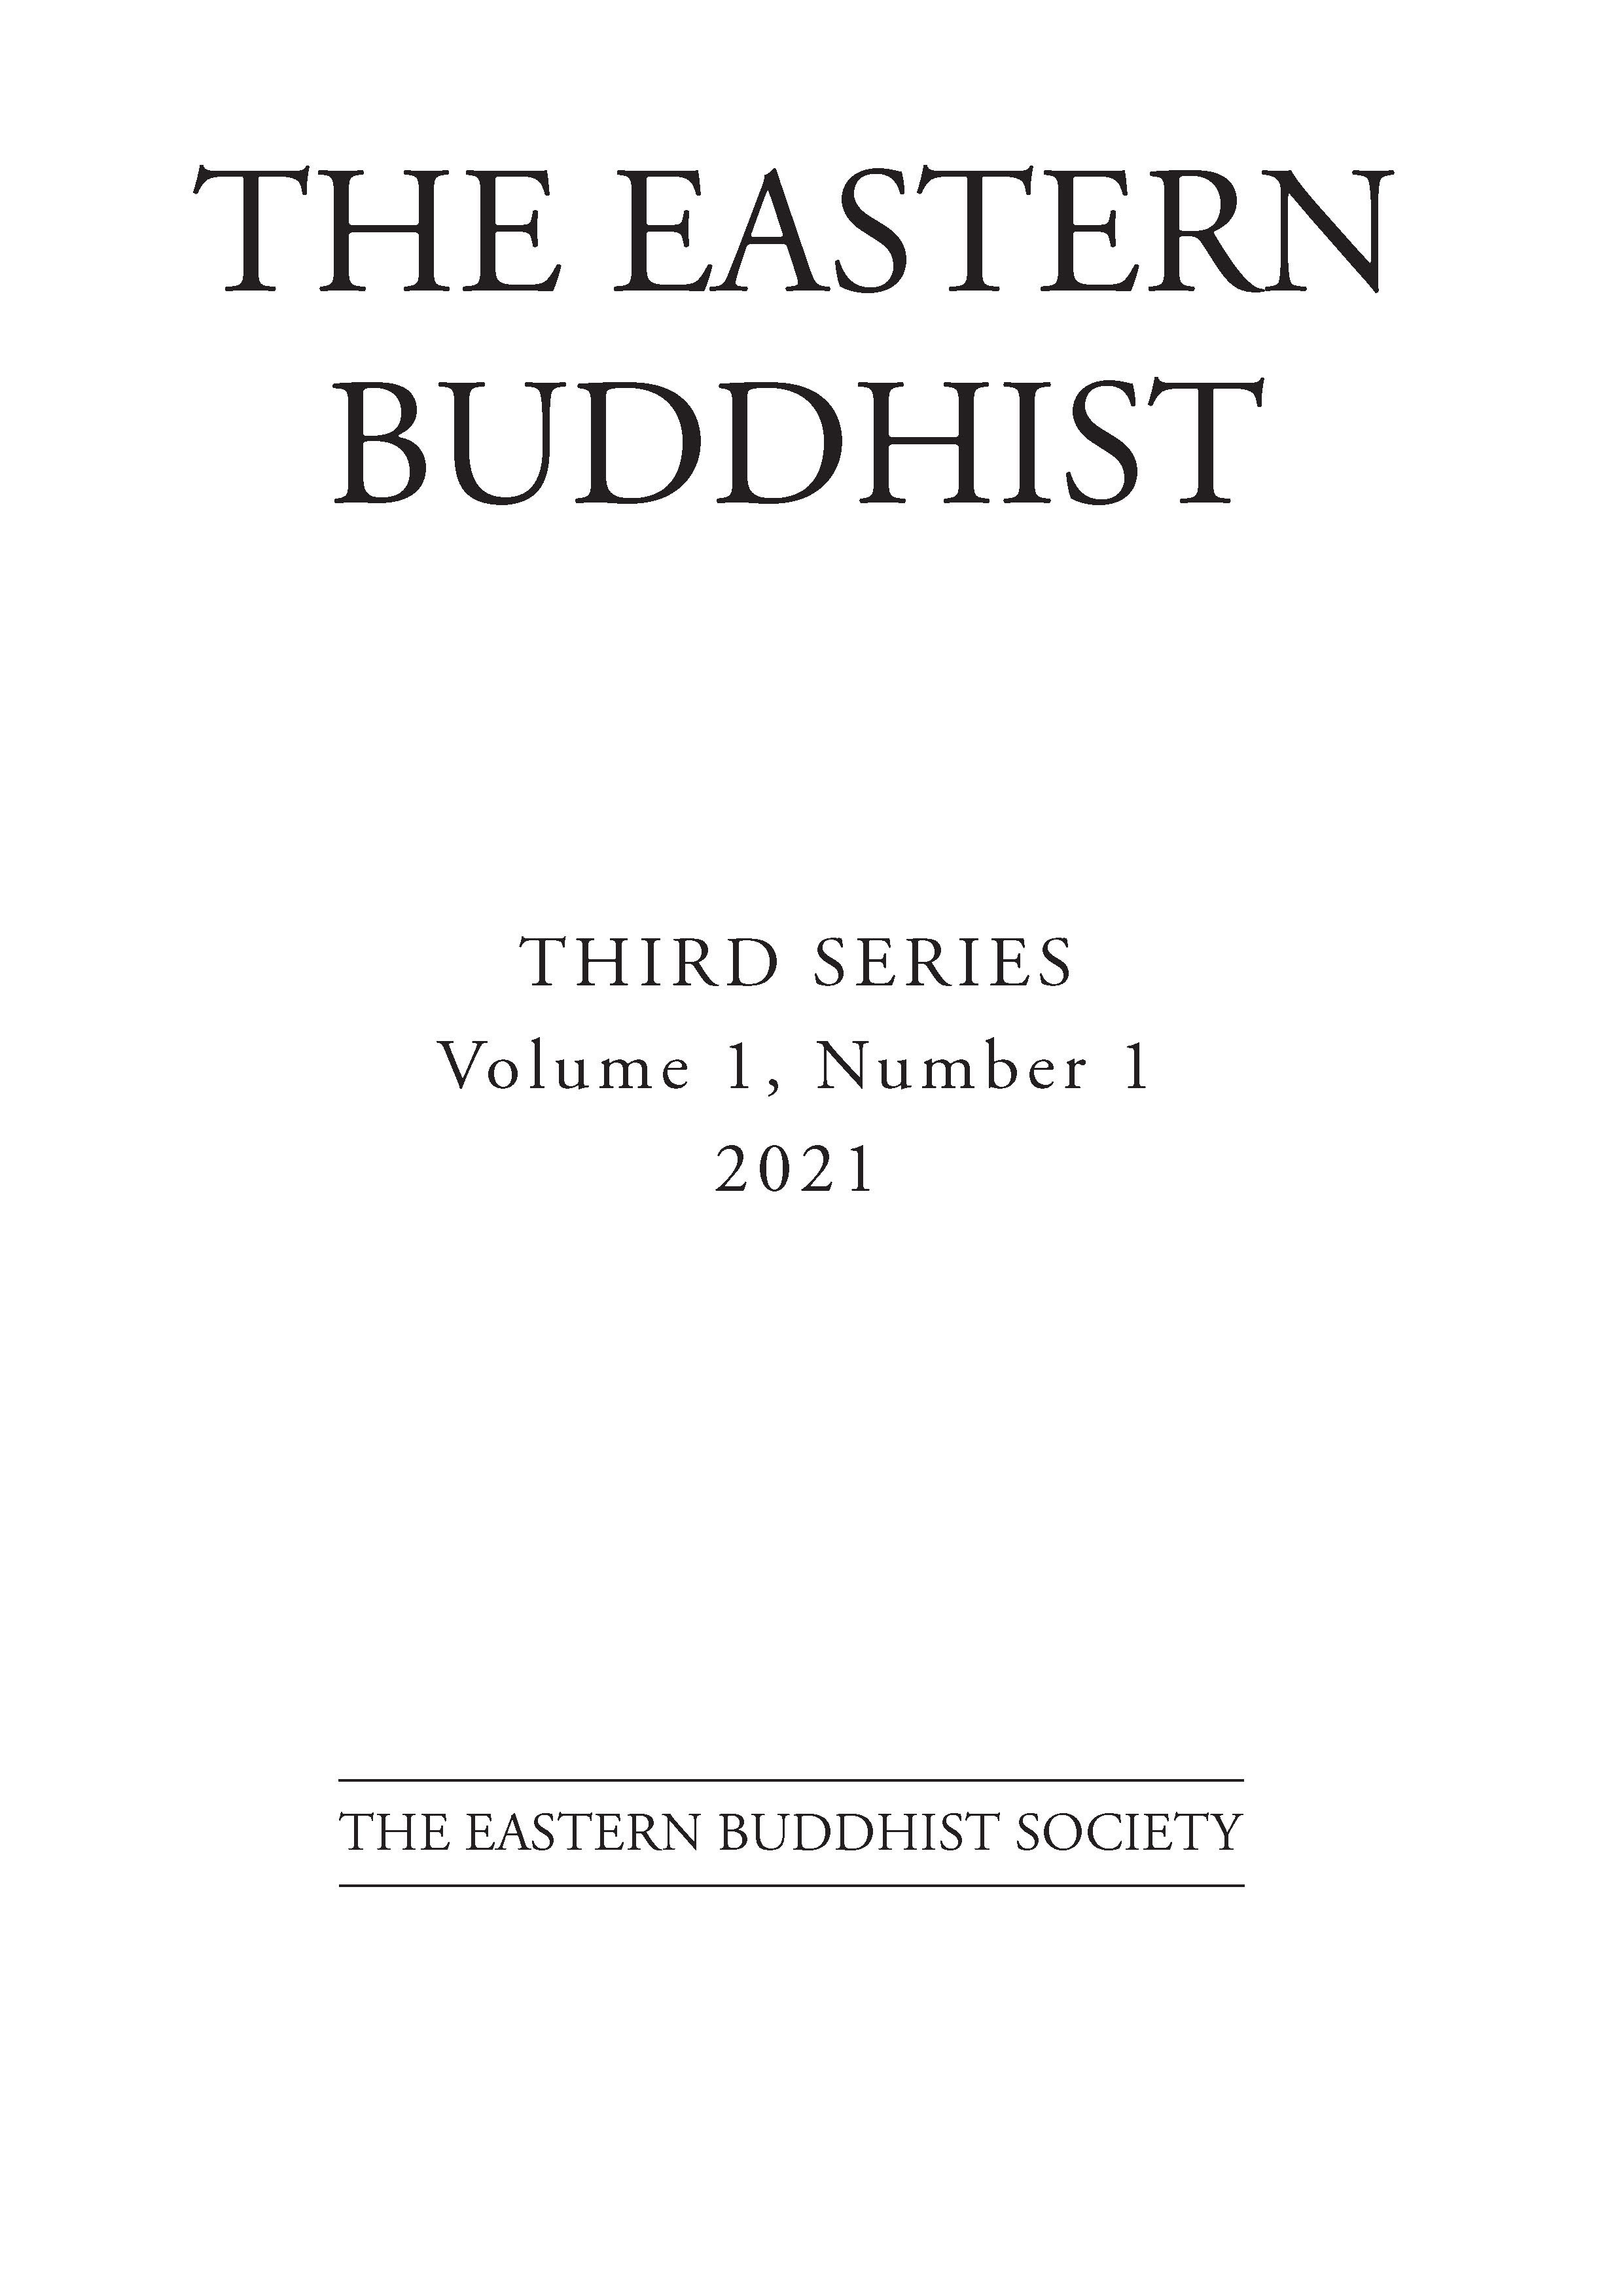 The Eastern Buddhist-Third Series Volume 1-1 2021-front.jpg